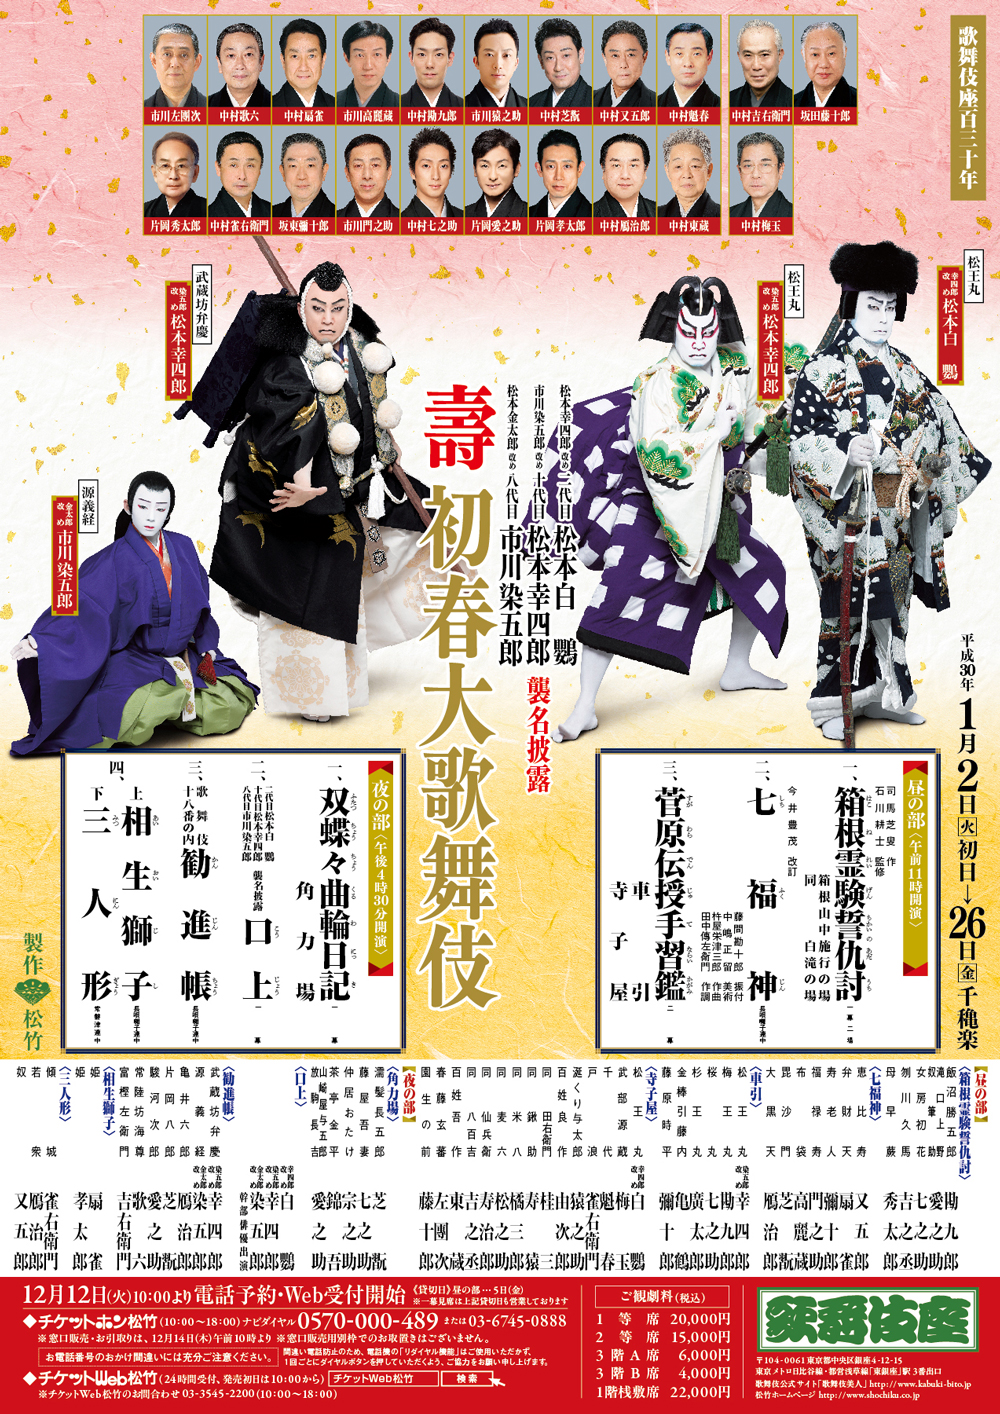 January at the kabukiza